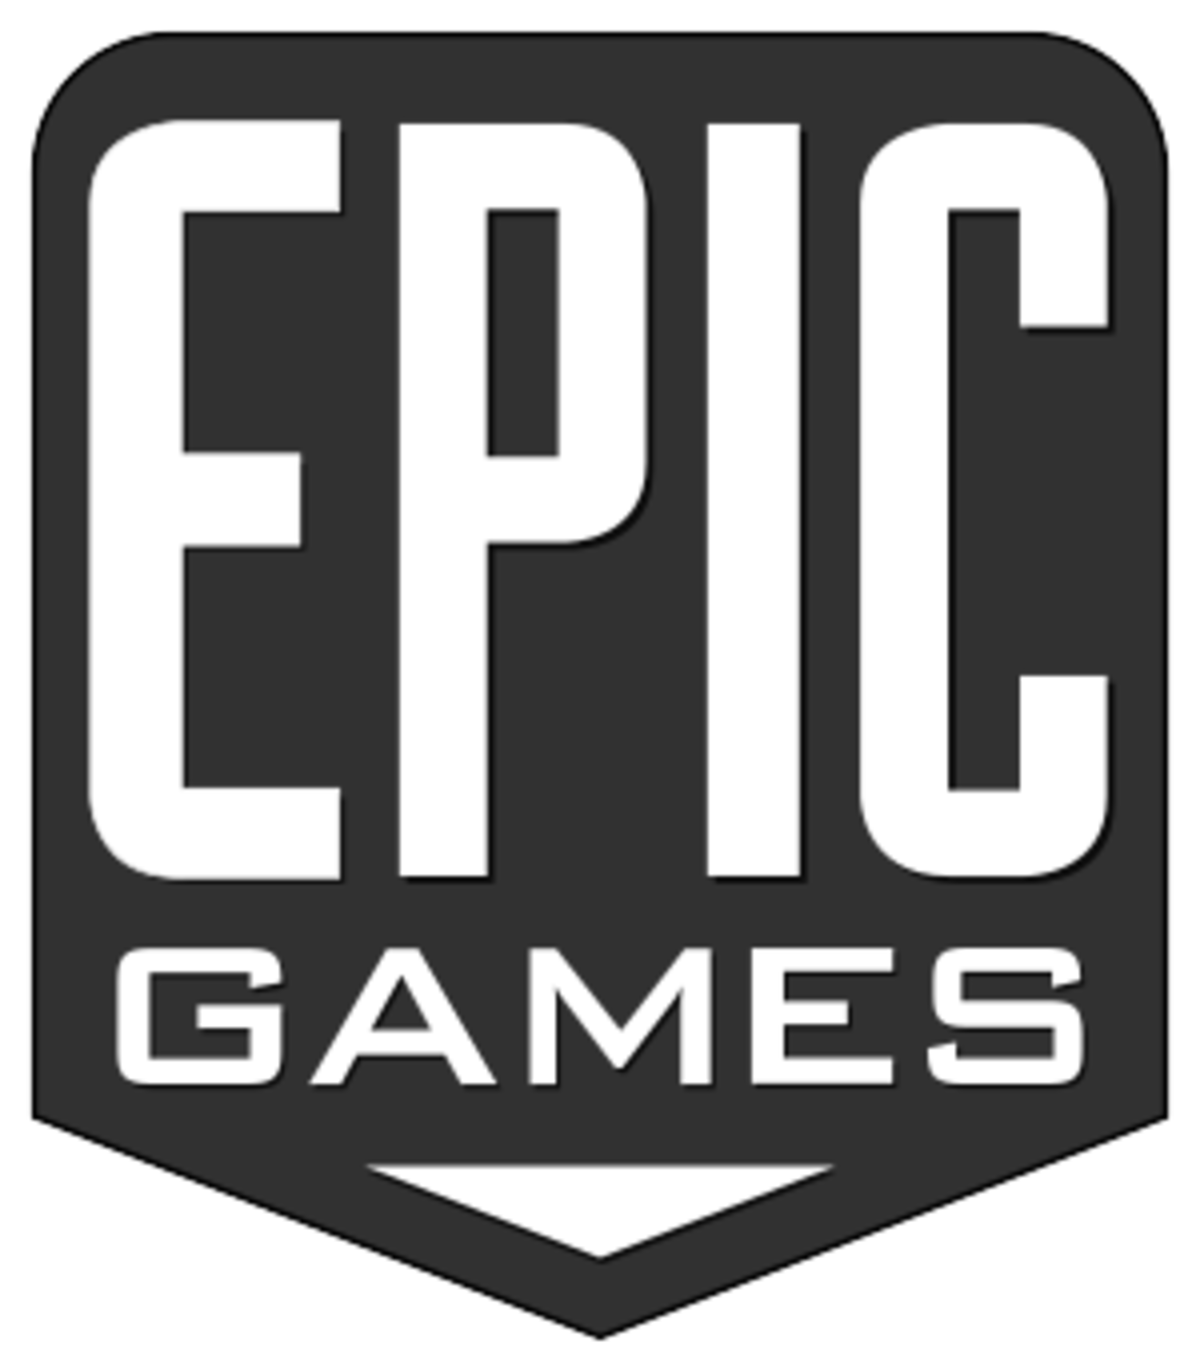 Text Tournament Pinball Unreal Fortnite Logo Epic PNG Image